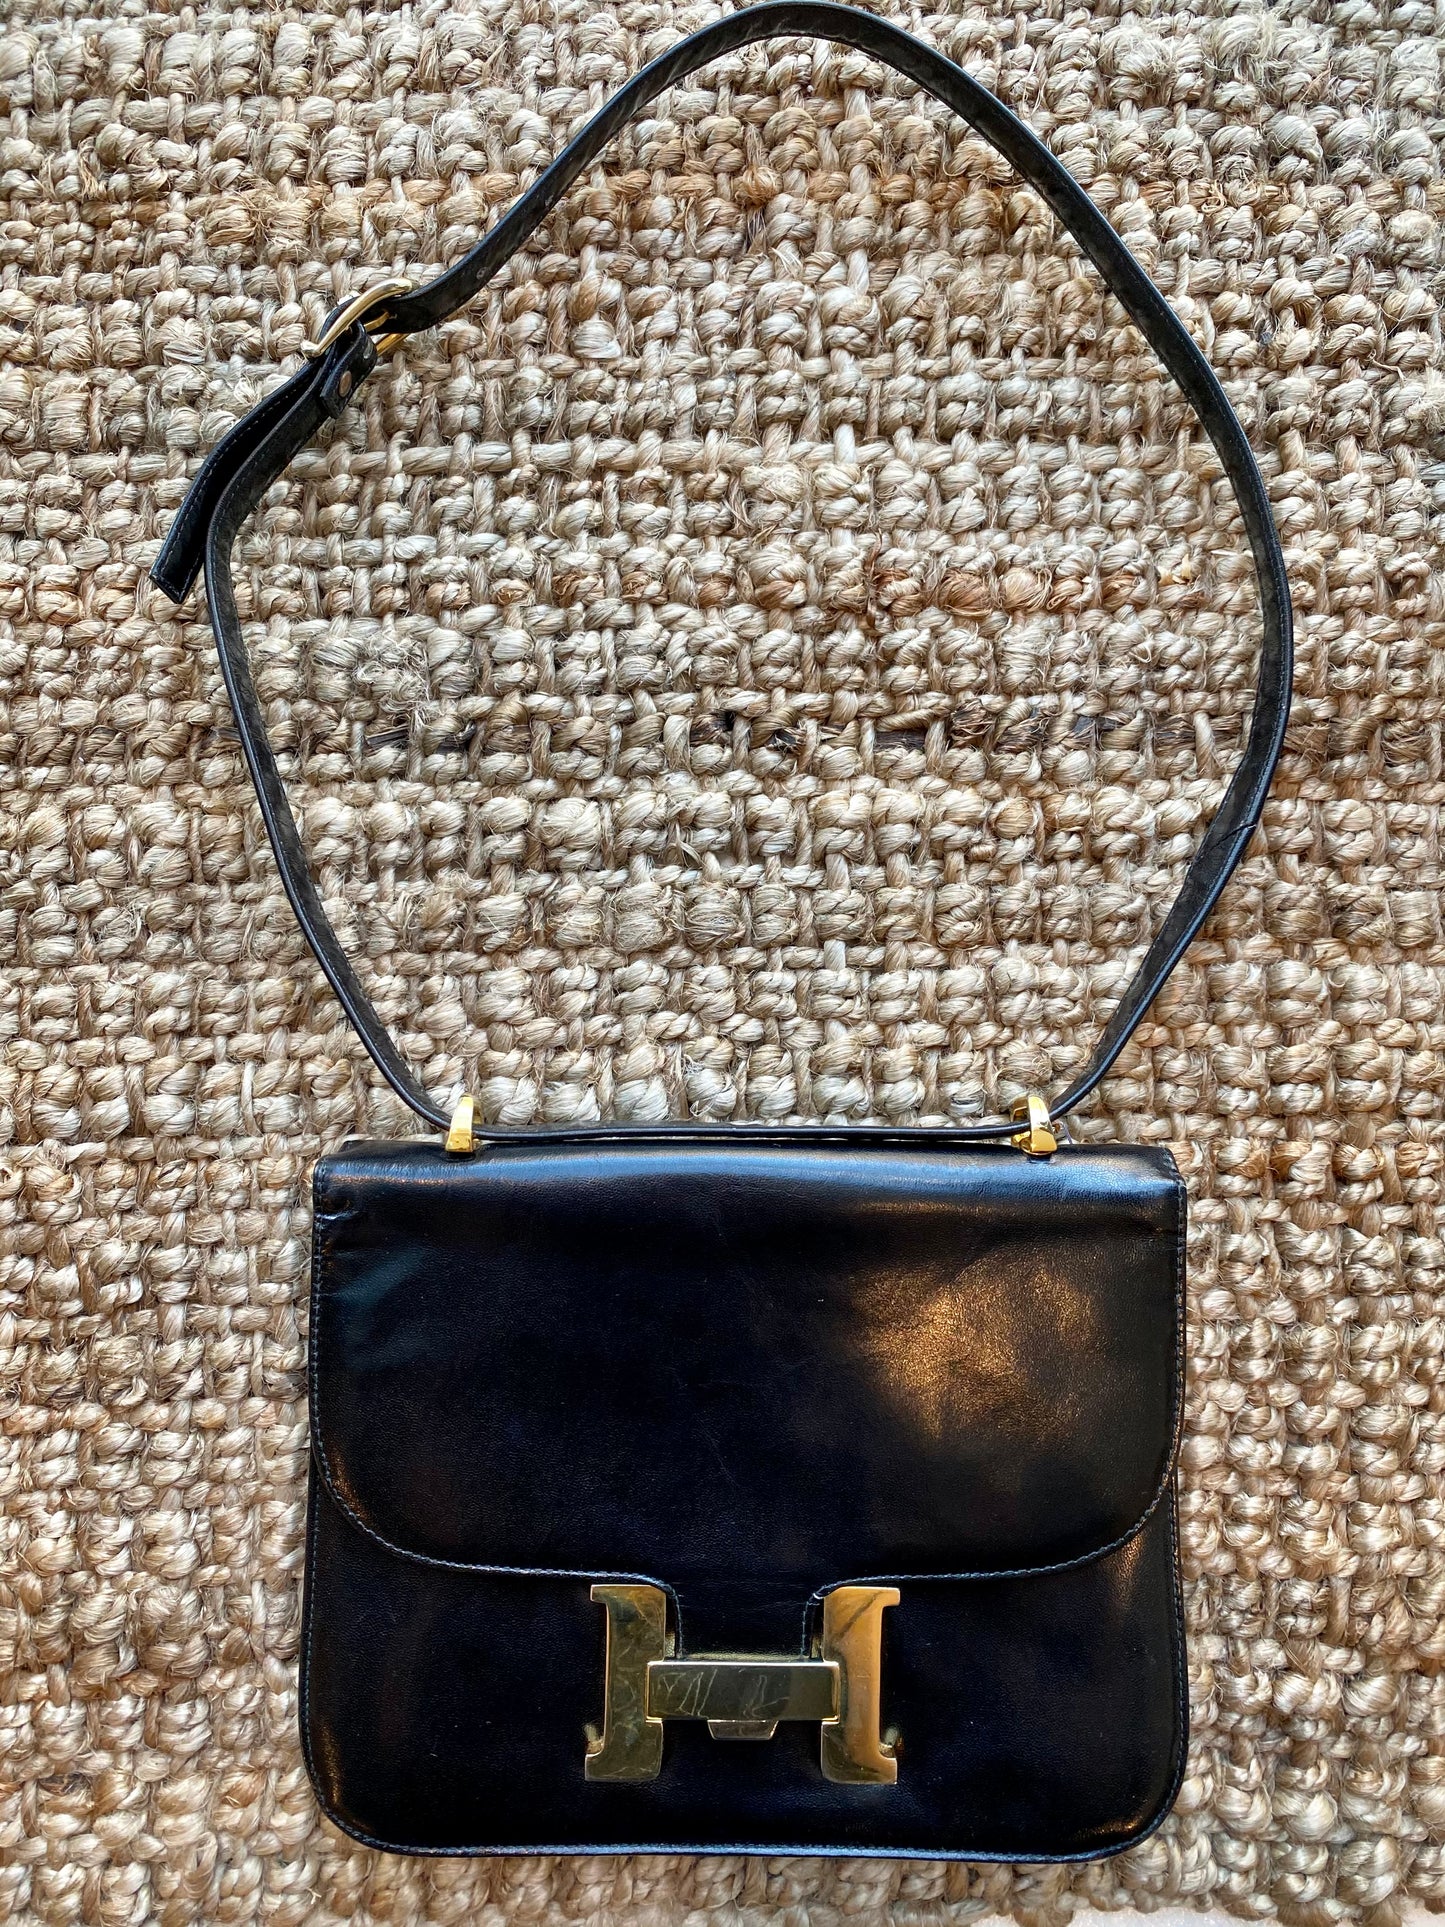 Black Handbag with Gold "H" Enclosure